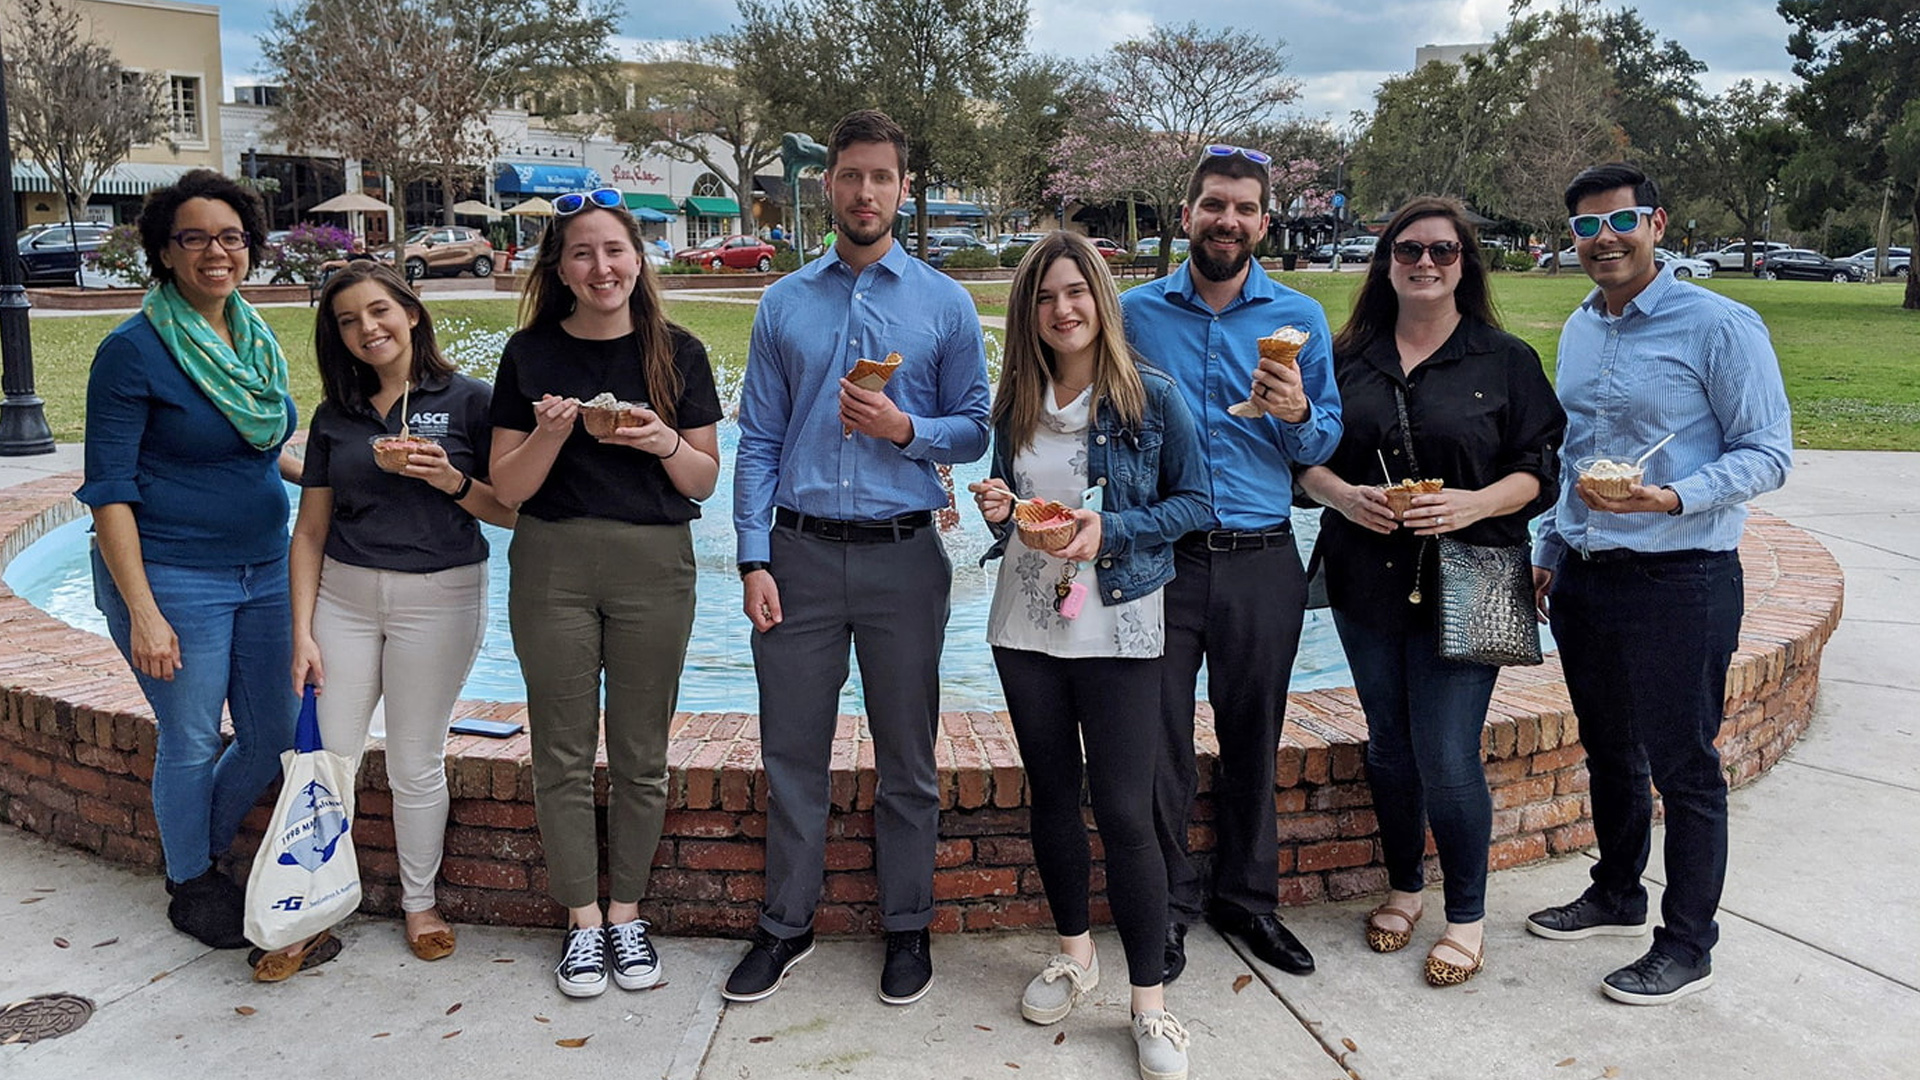 Our Orlando team enjoys an ice cream outing!